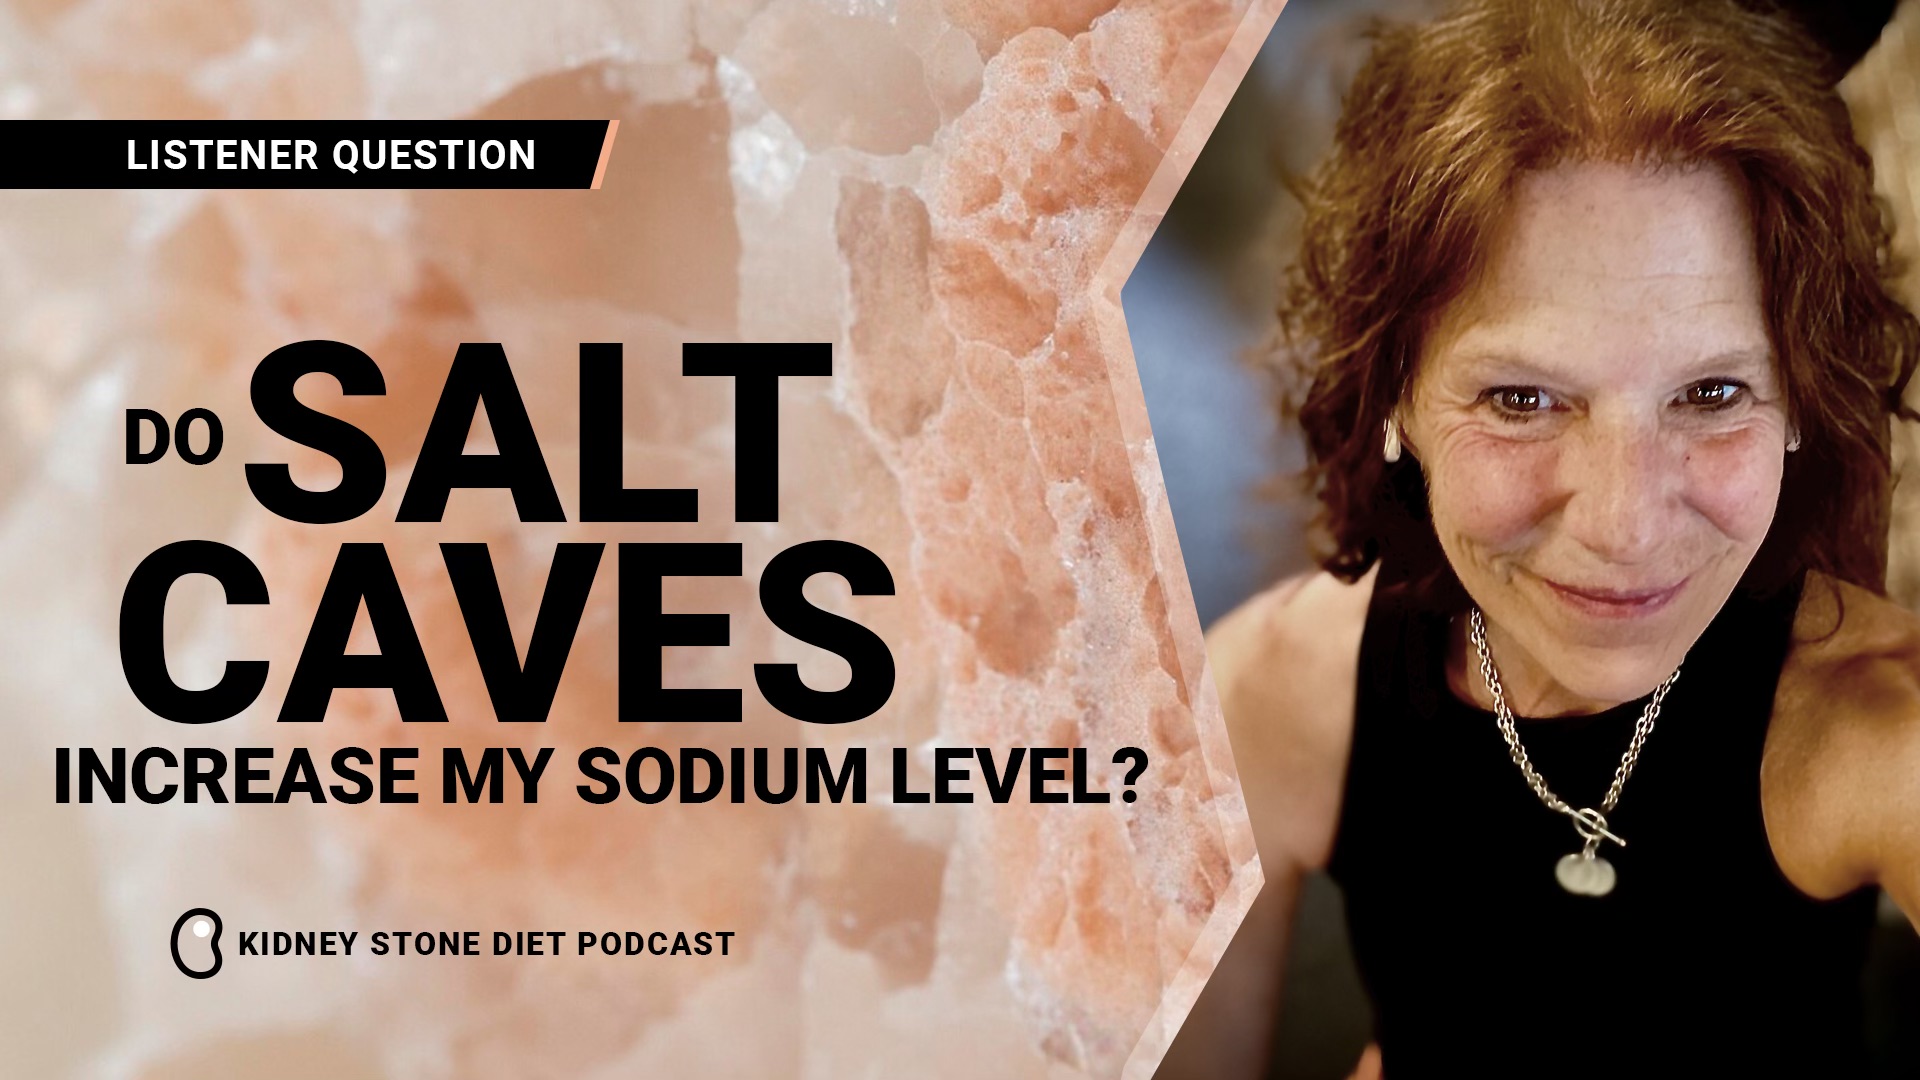 Do salt caves increase my sodium level?